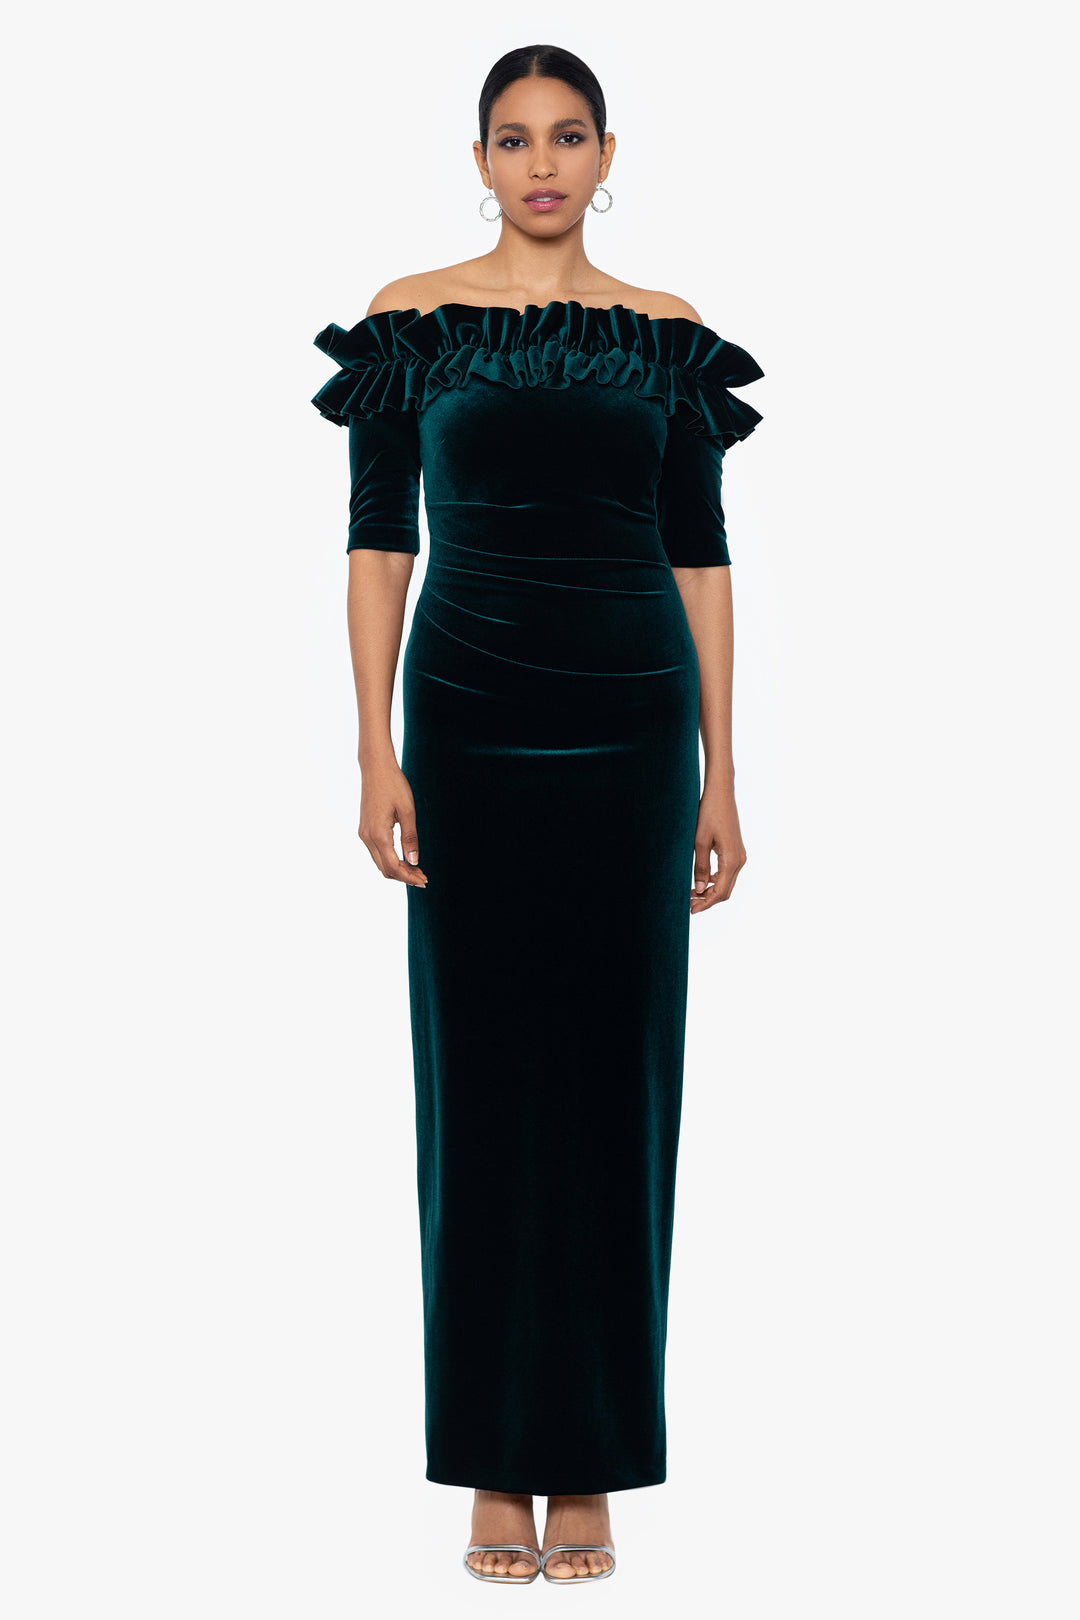 "Tiffany" Long Velvet 3/4 Sleeve Ruffle Top Dress